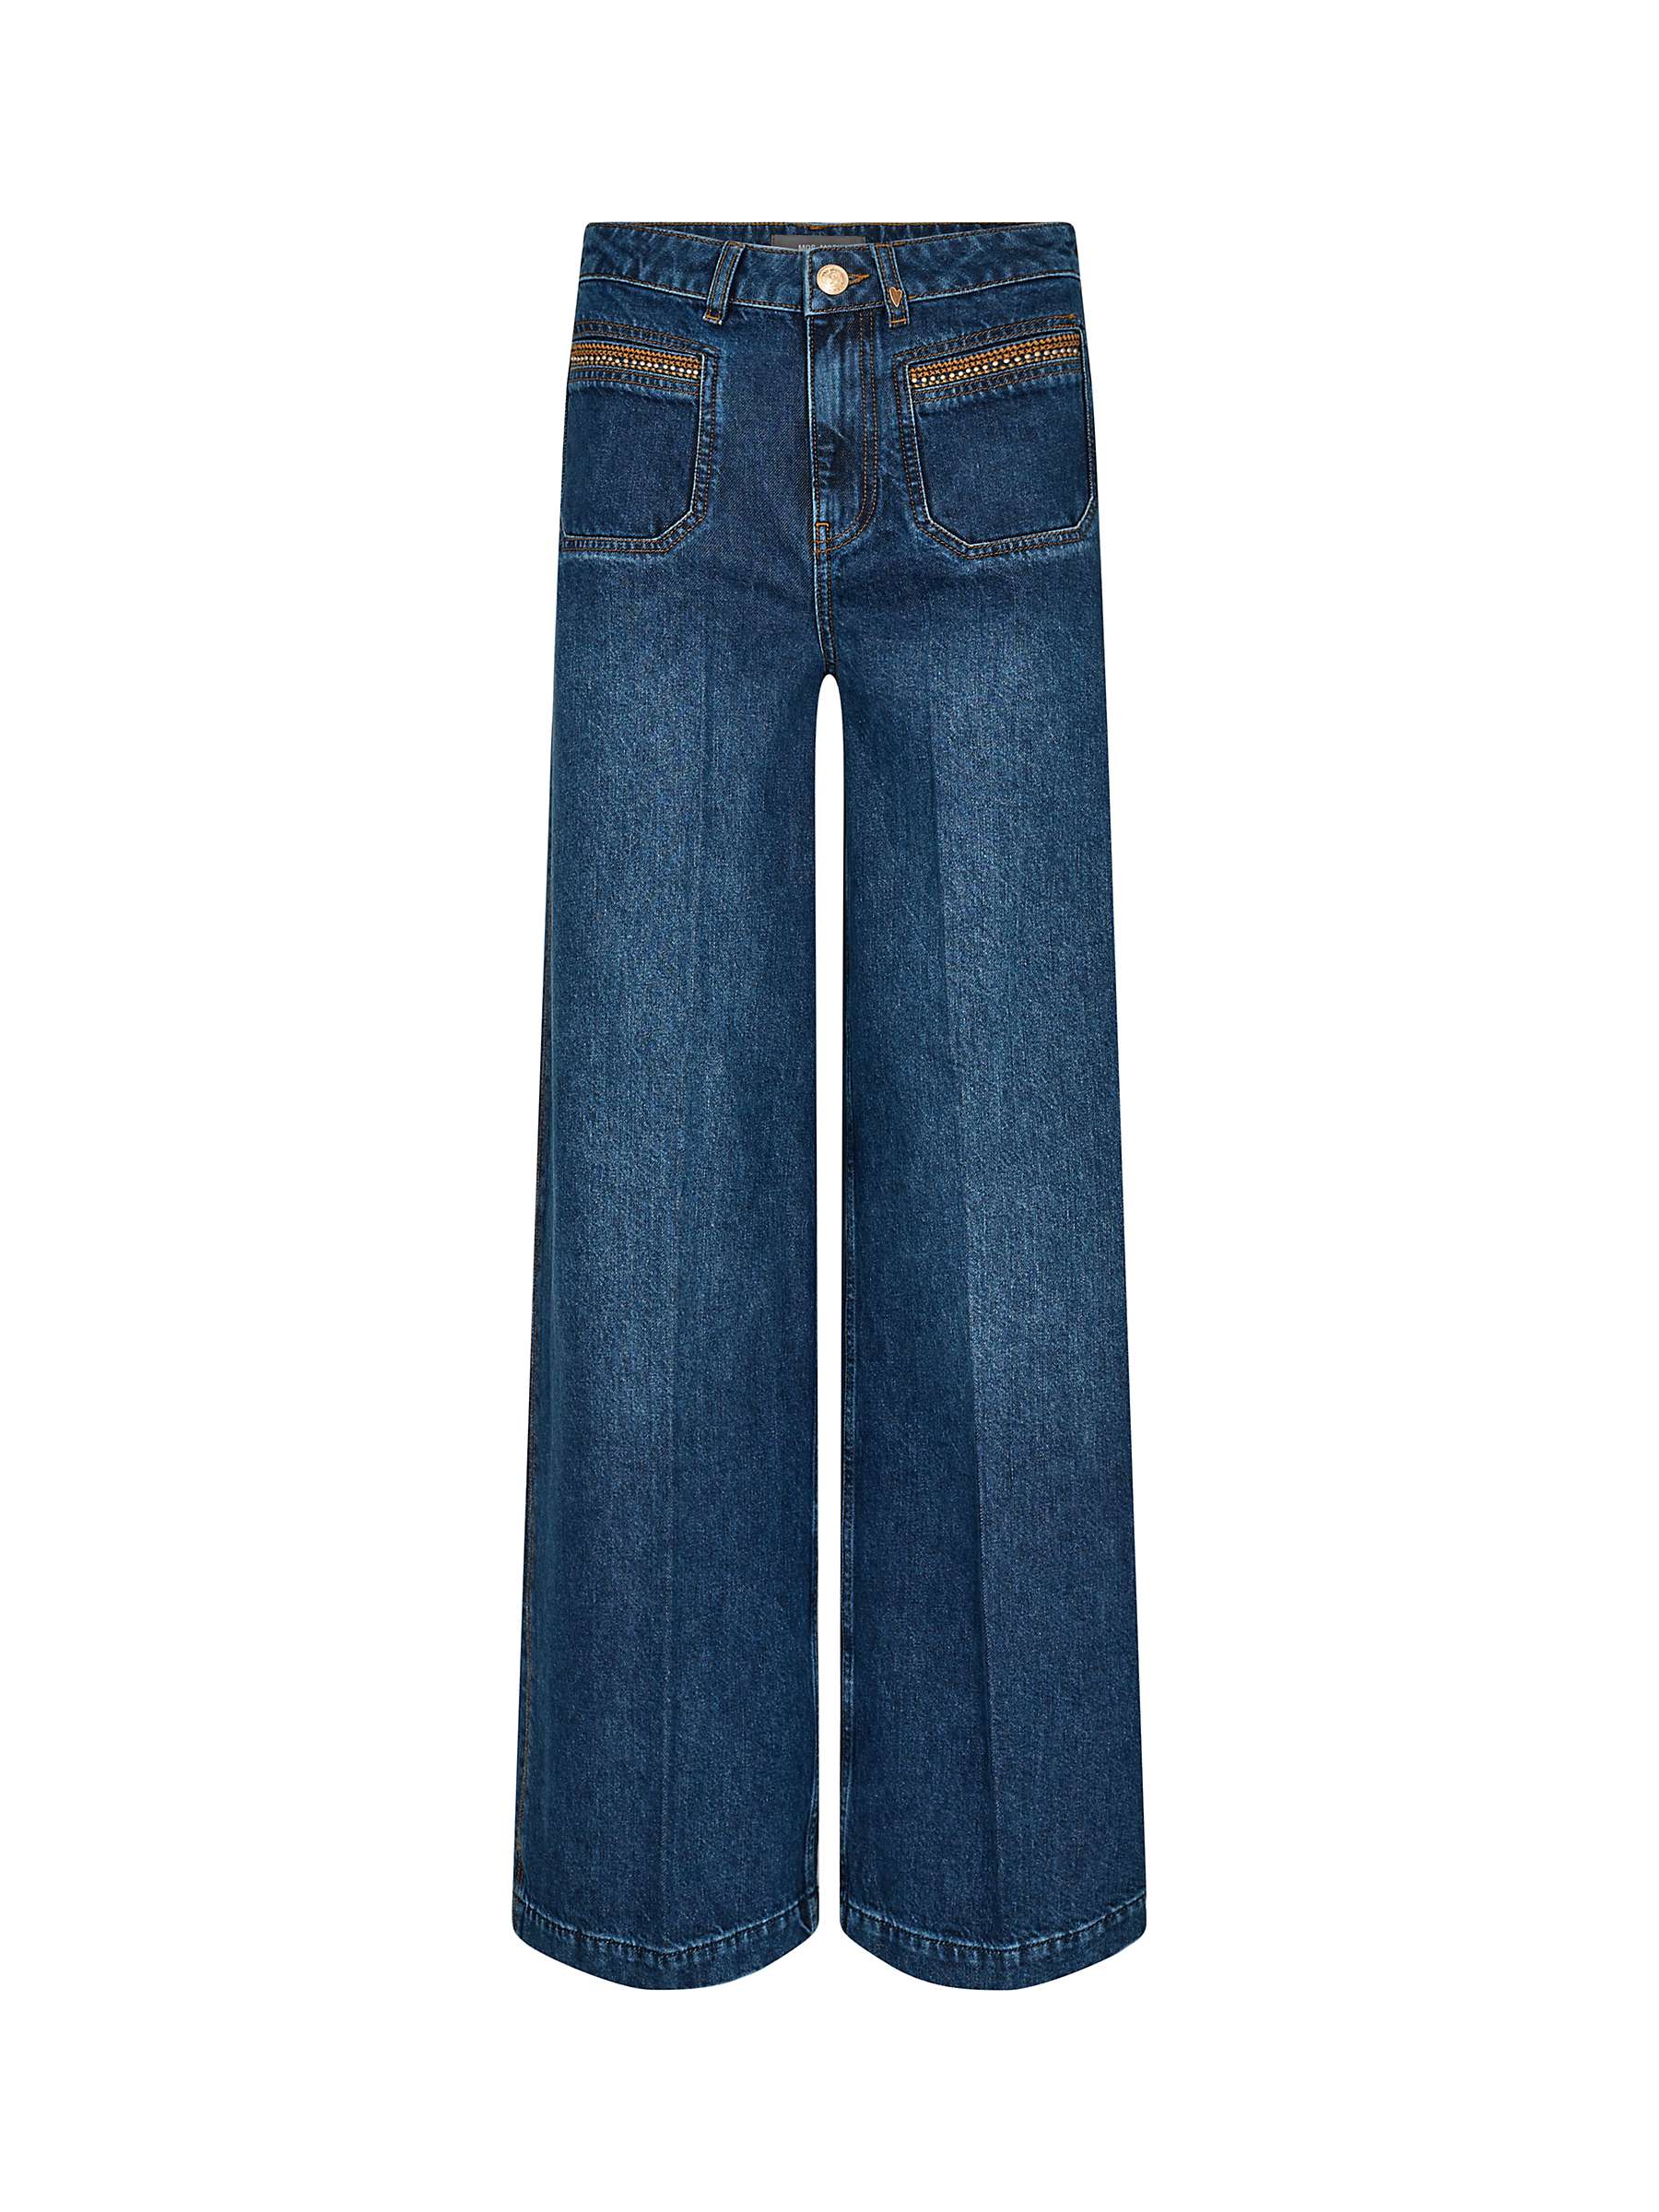 Buy MOS MOSH Colette Sassy High Rise Jeans, Blue Online at johnlewis.com